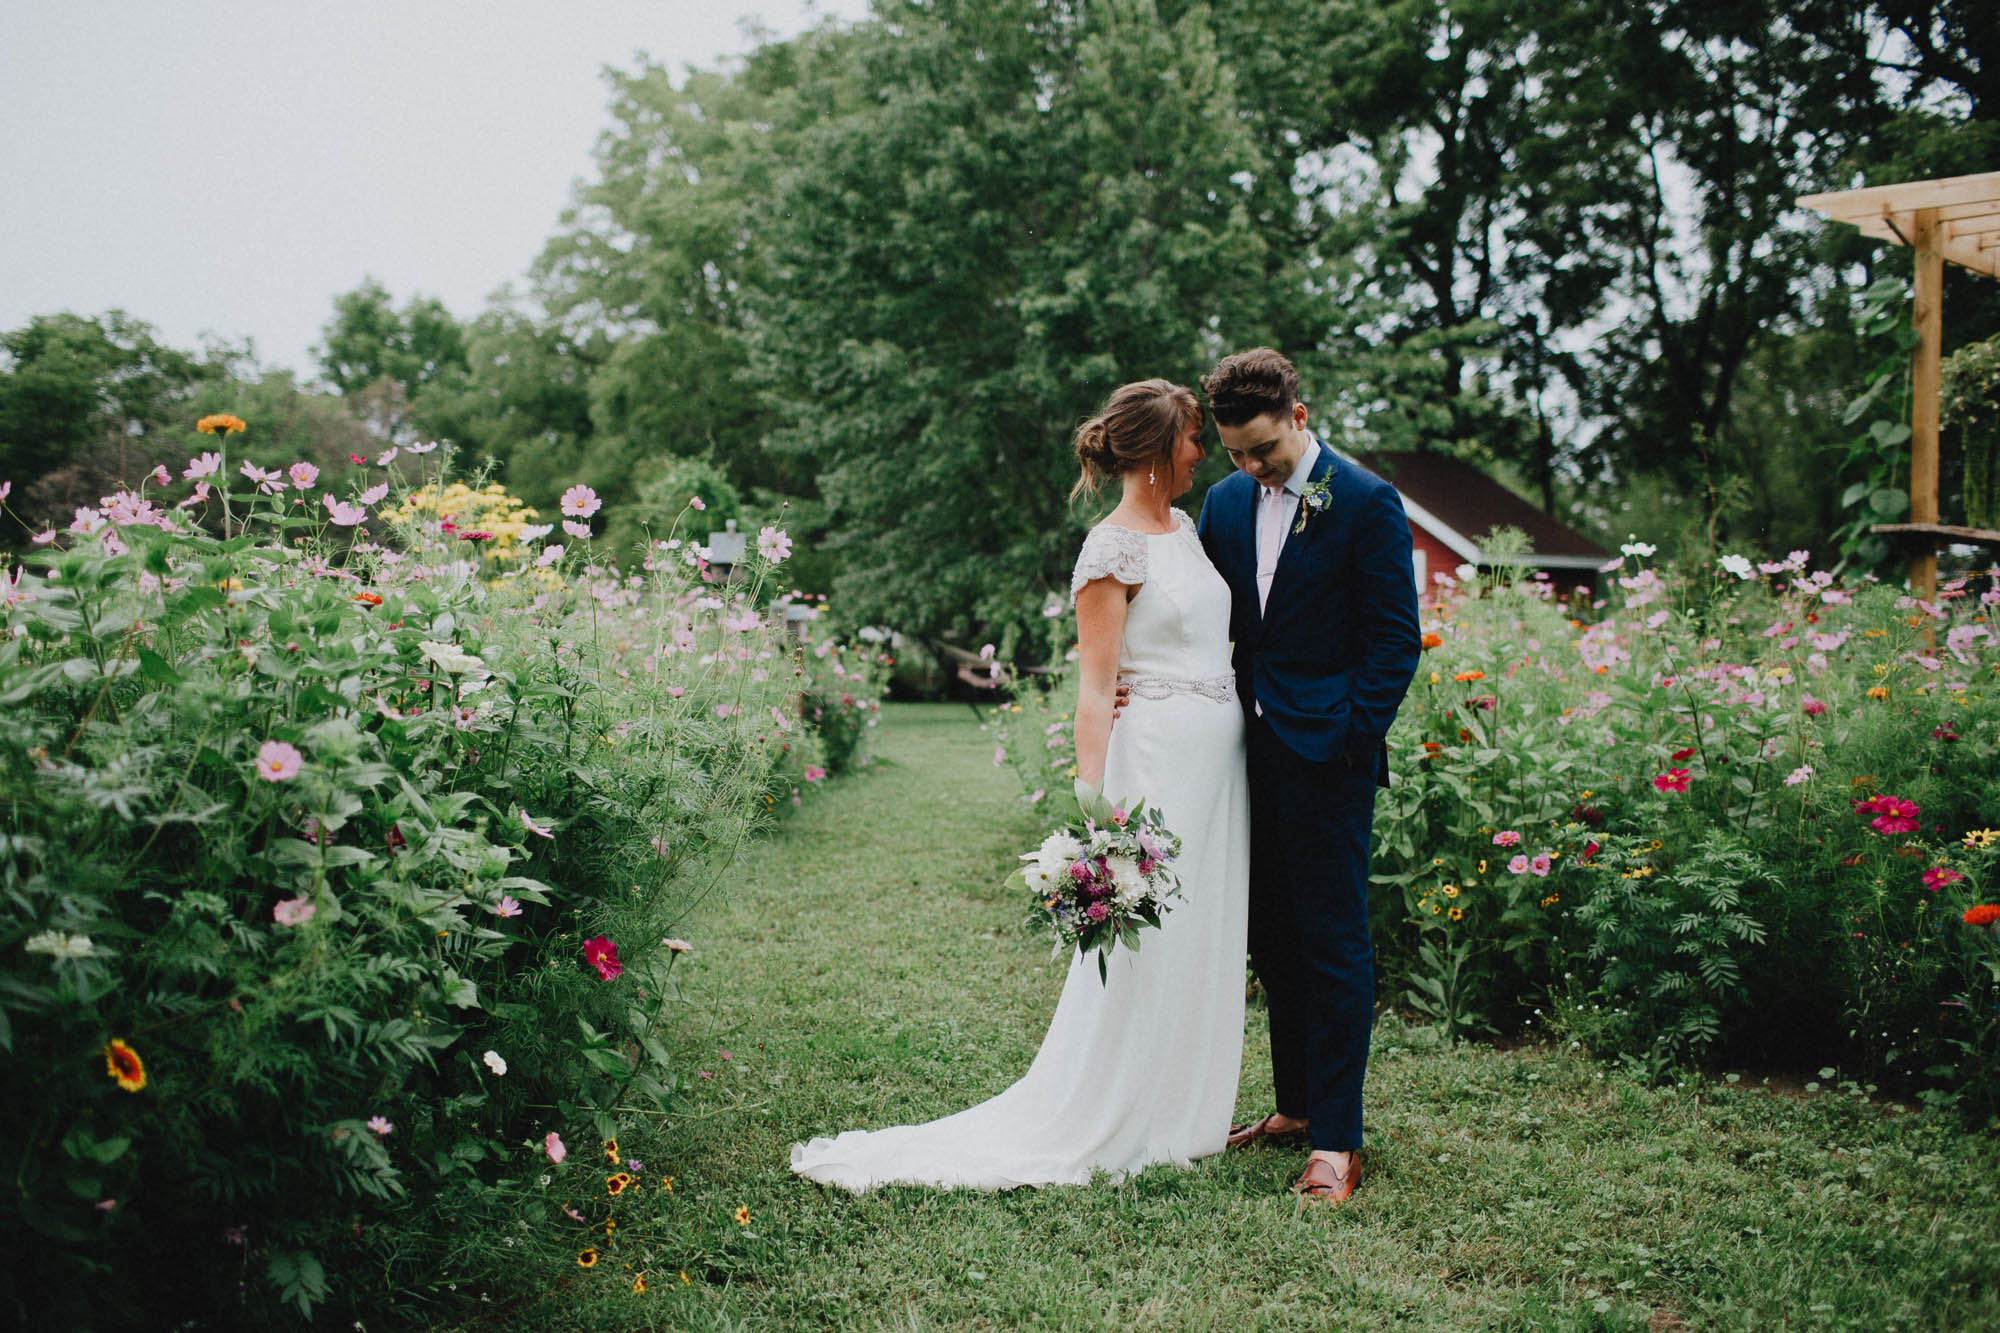 Leah-Graham-Michigan-Outdoor-DIY-Wedding-038@2x.jpg